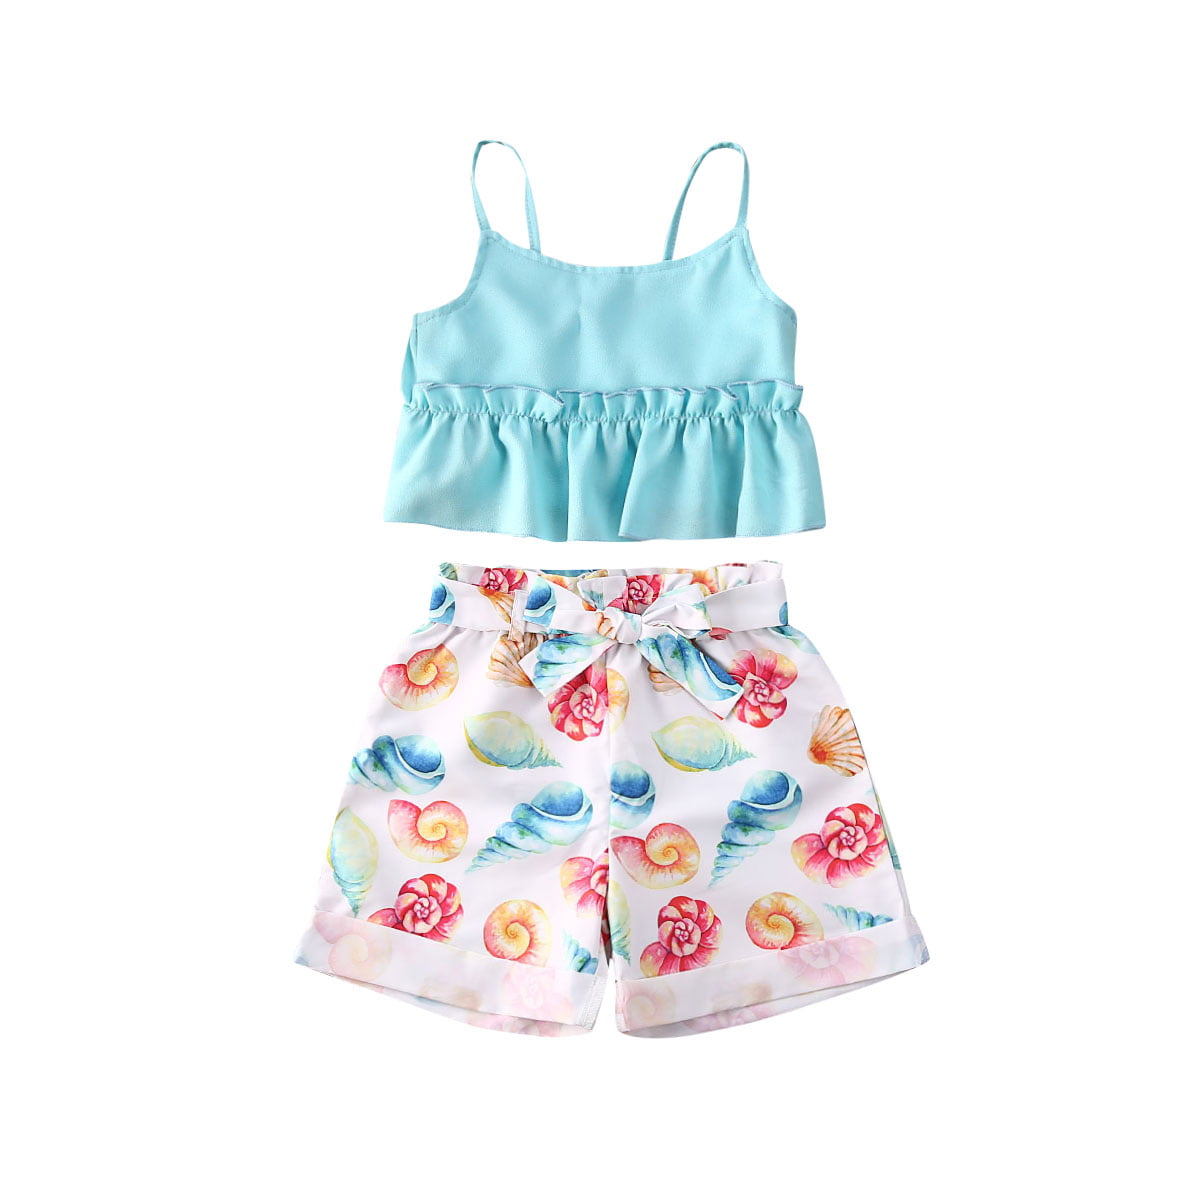 Imcute - Imcute 1-5Years Summer Girl Sleeveless Tops+Floral Shorts Set ...